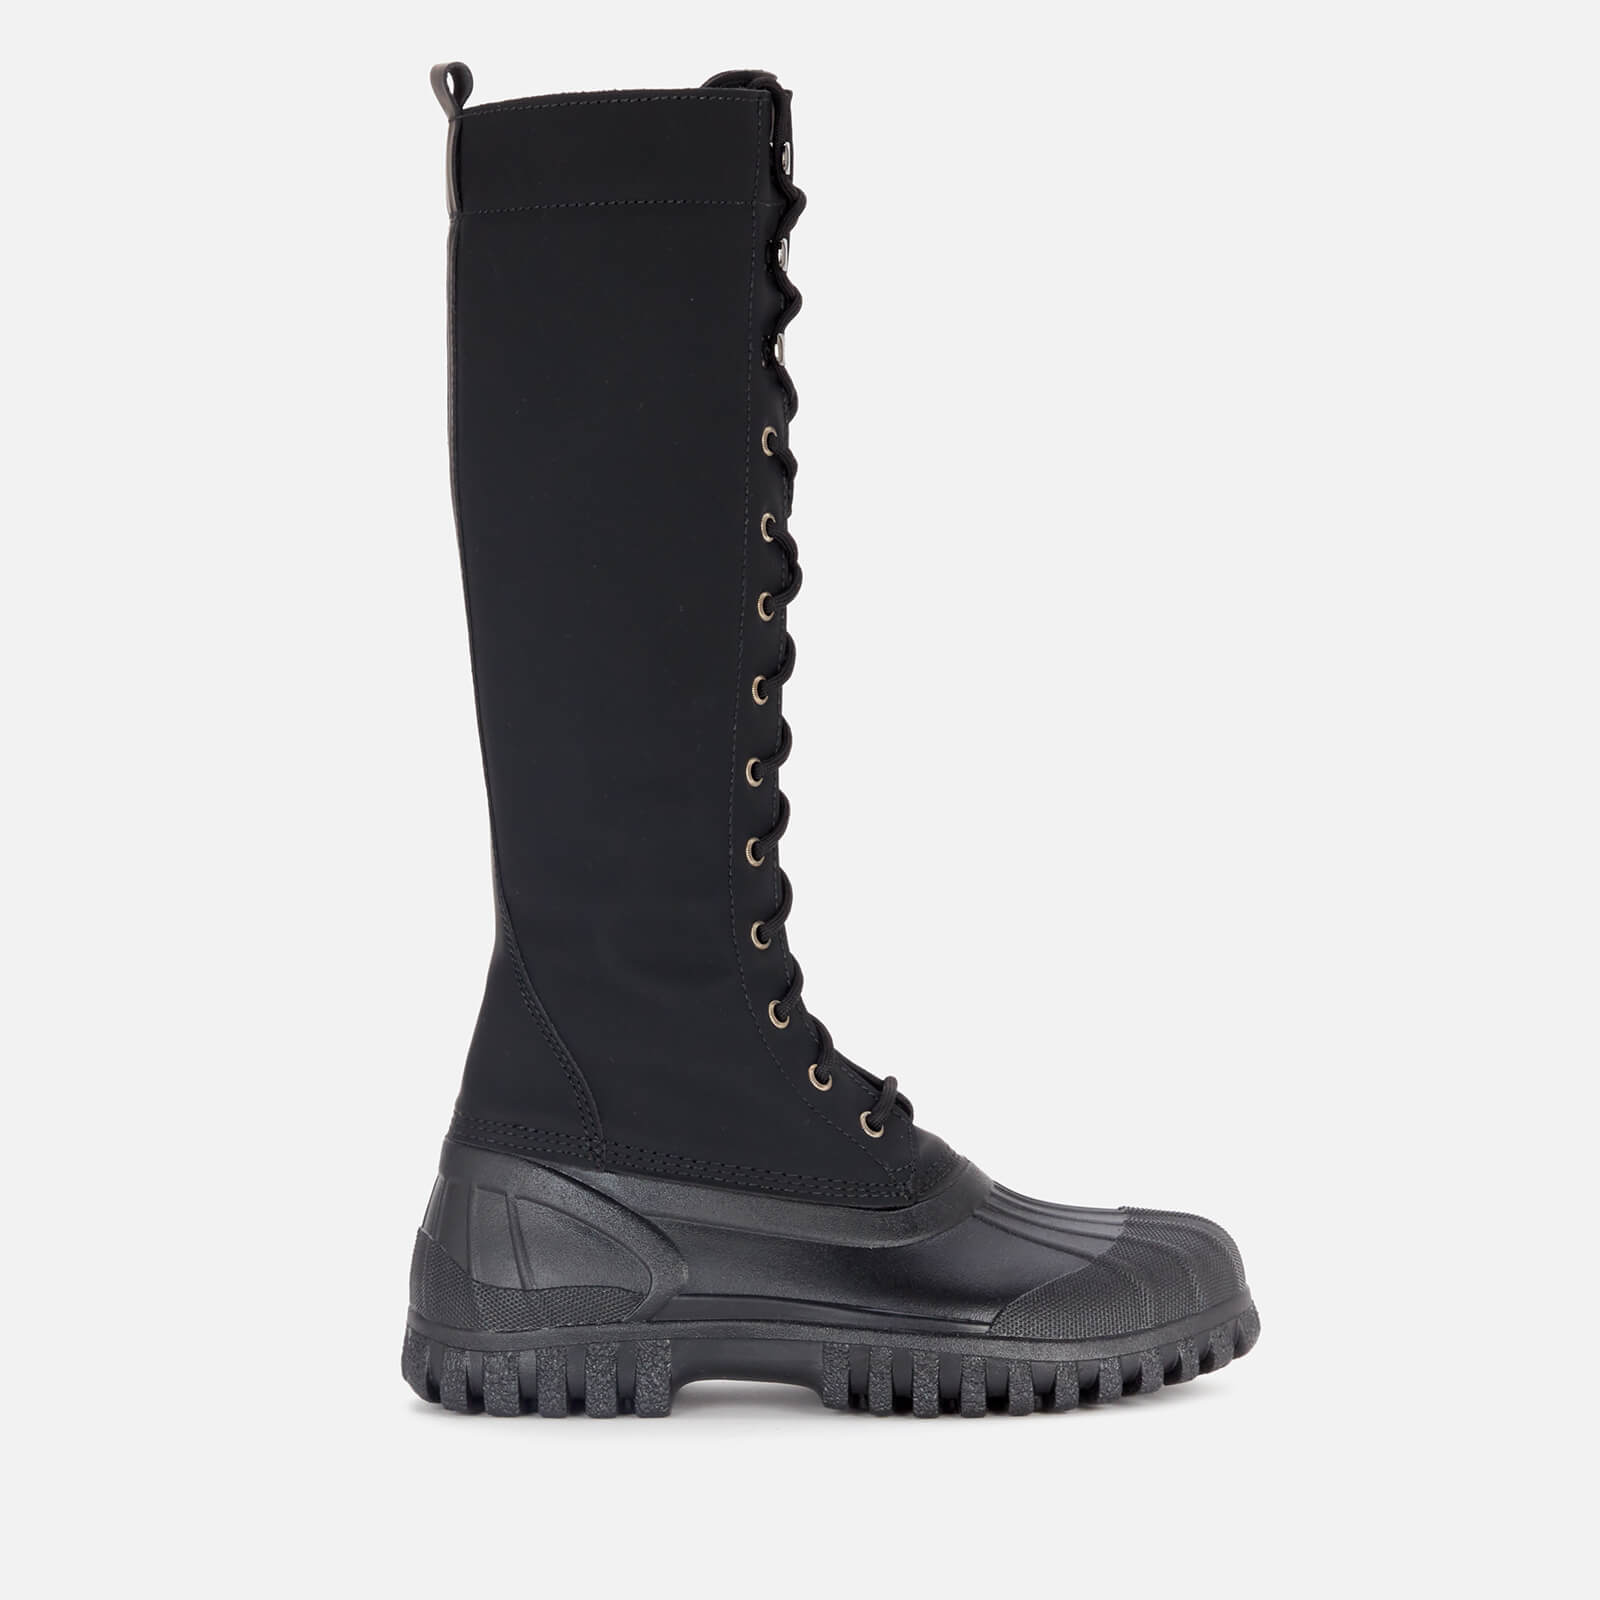 Rains X Diemme Women Anatra Alto Waterproof Knee High Boots - Black - UK 4.5